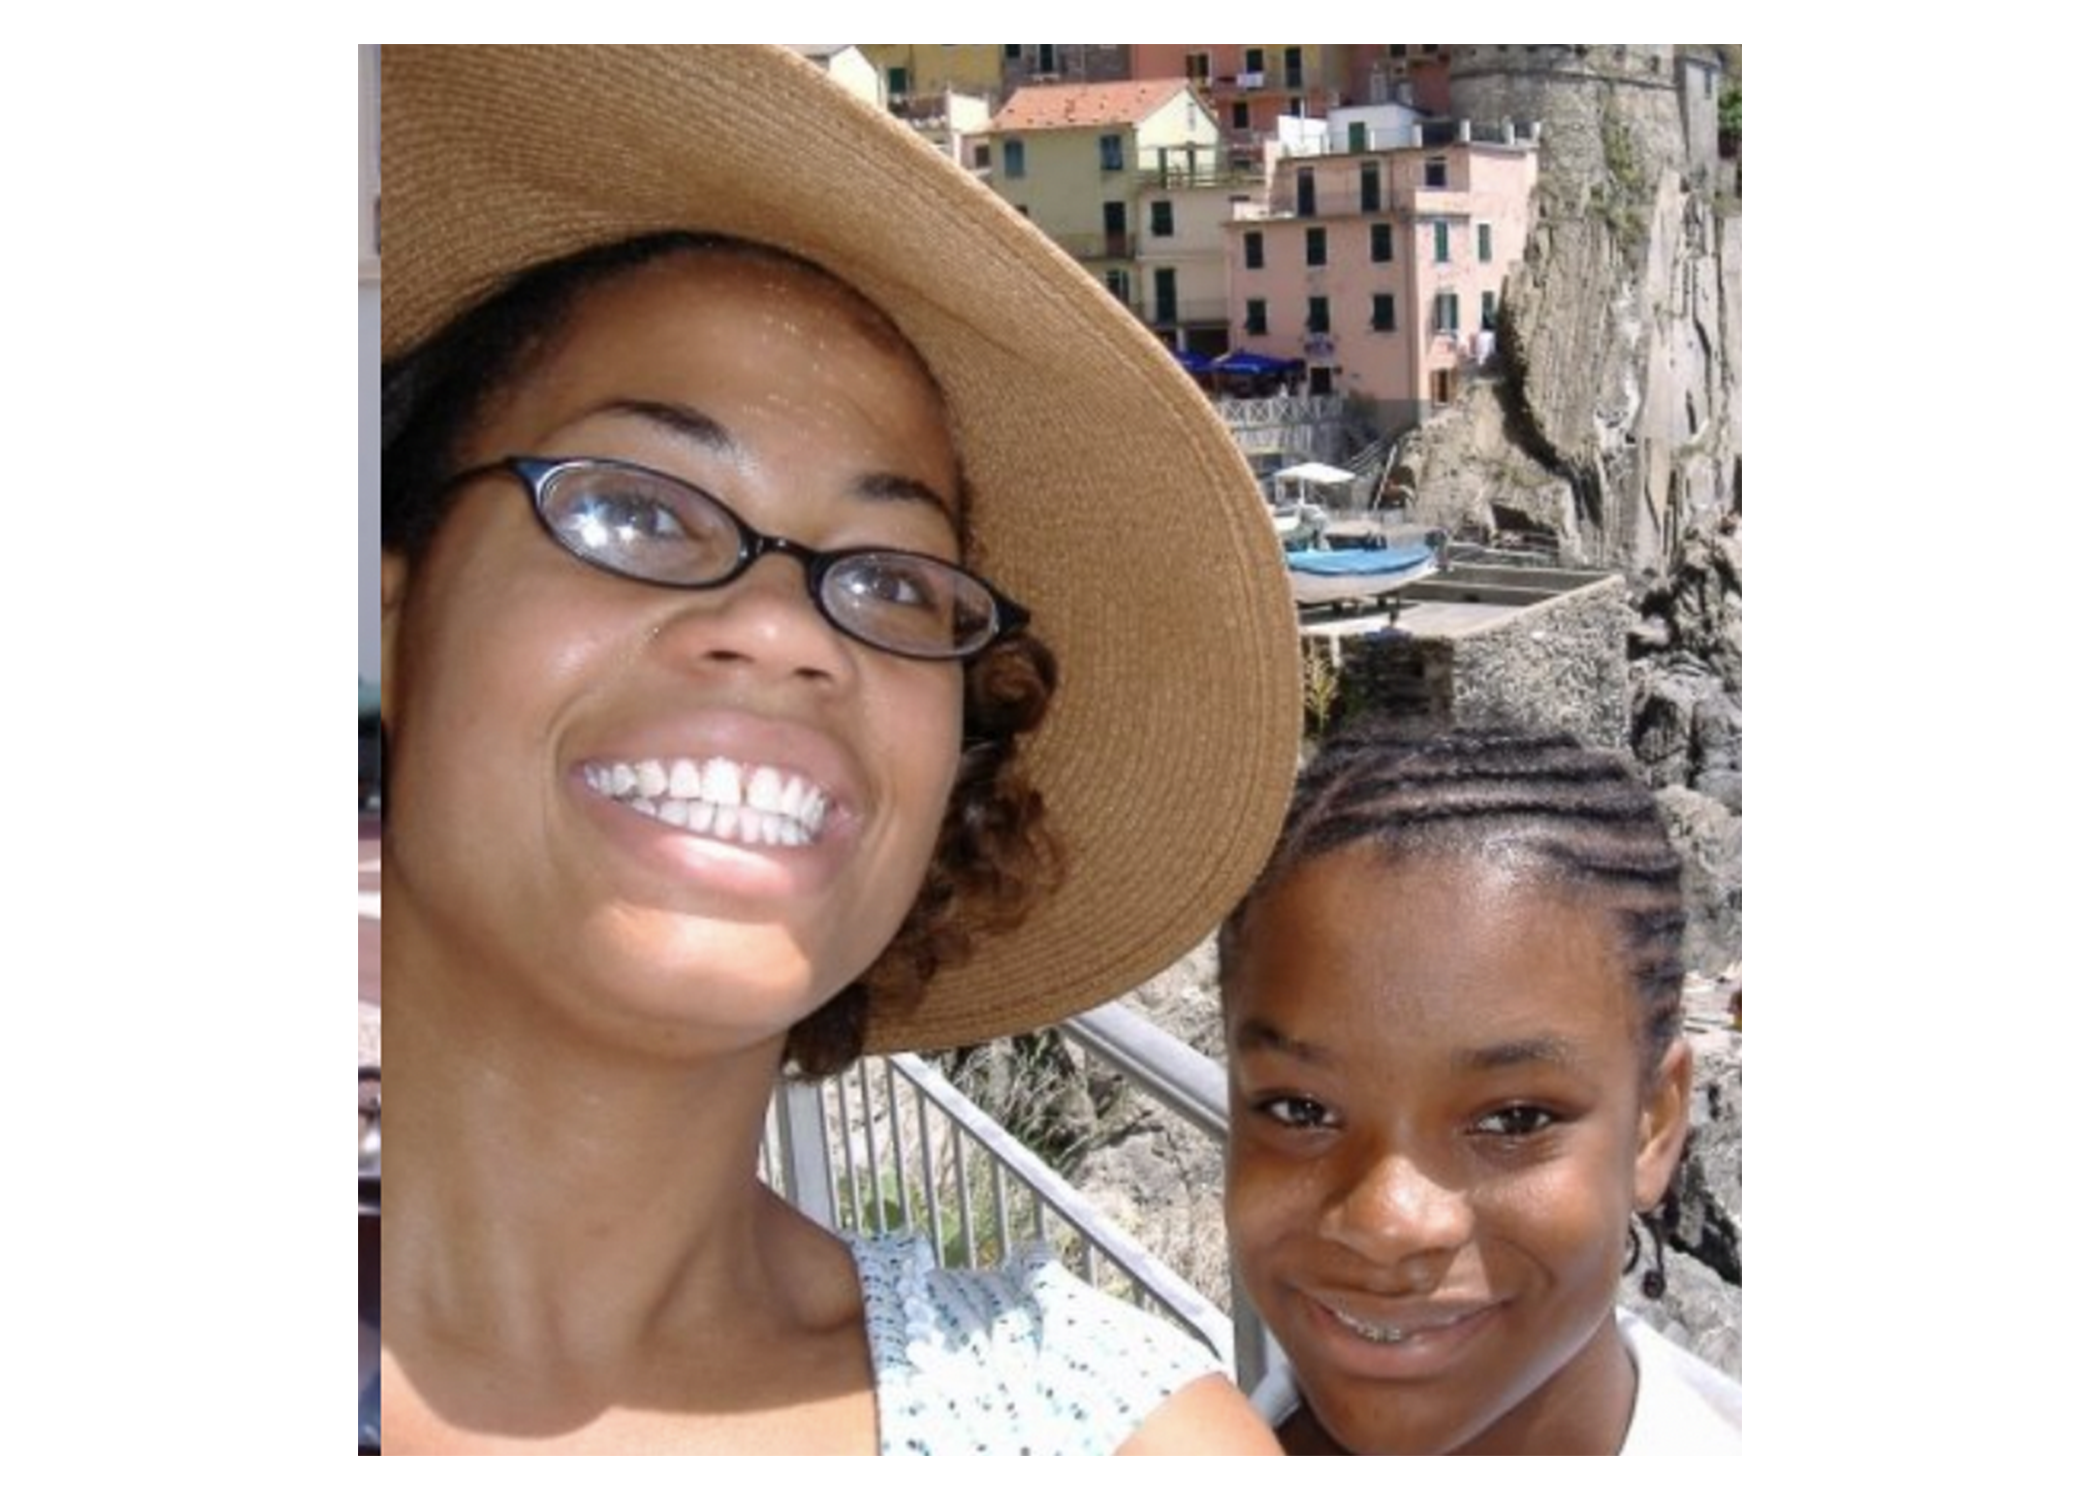 Caption: Principal Jasmine Brann (then high school teacher) and student at Cinque Terre in Italy. Summer 2007 on an international student tour she led. Source: Jasmine Brann.